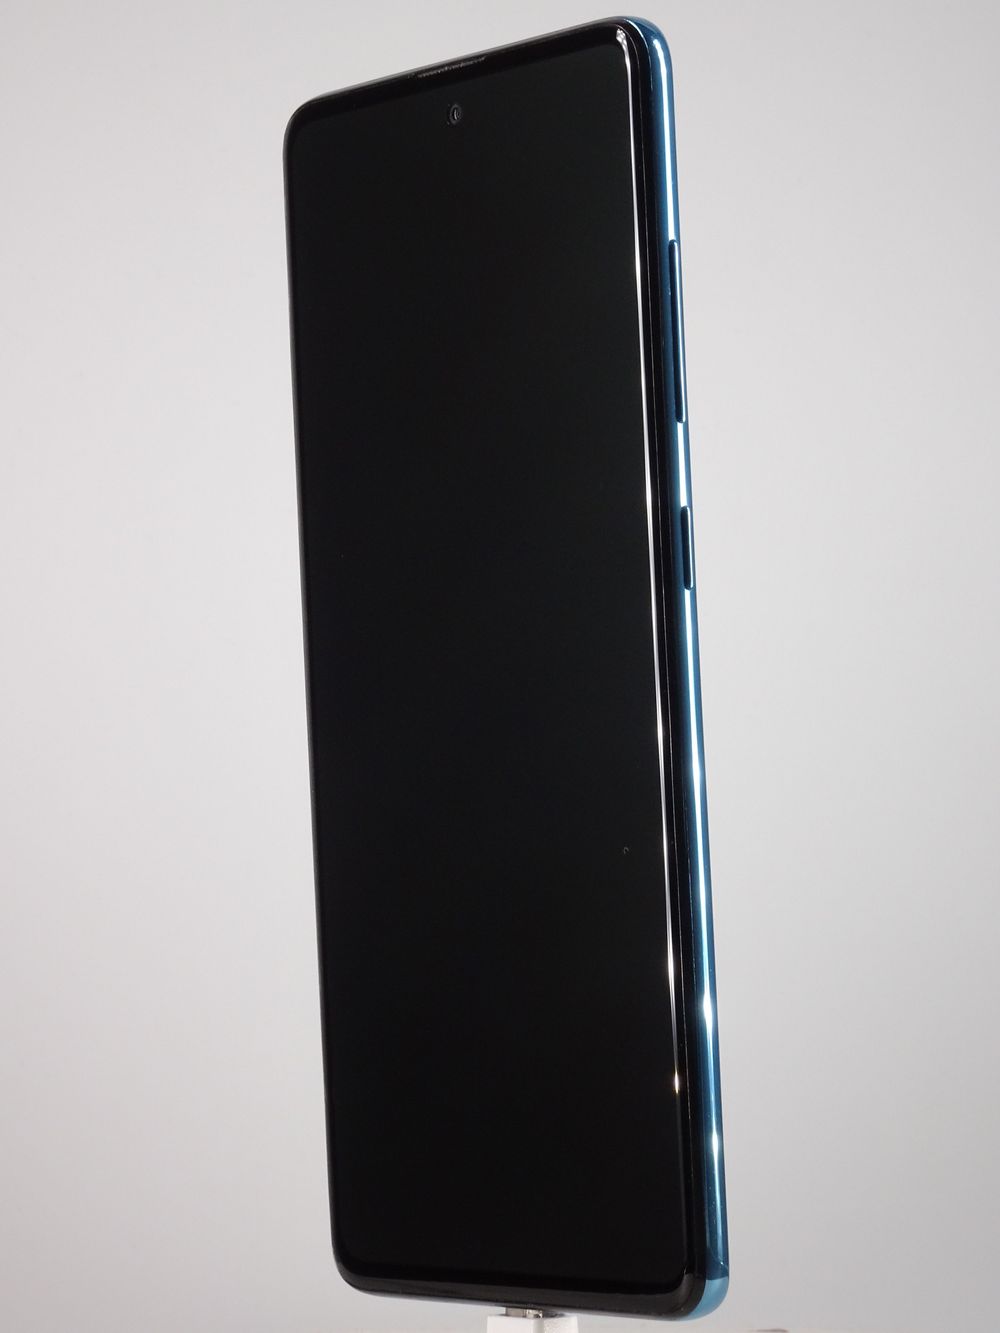 Telefon mobil Samsung Galaxy A51, Blue, 64 GB, Excelent